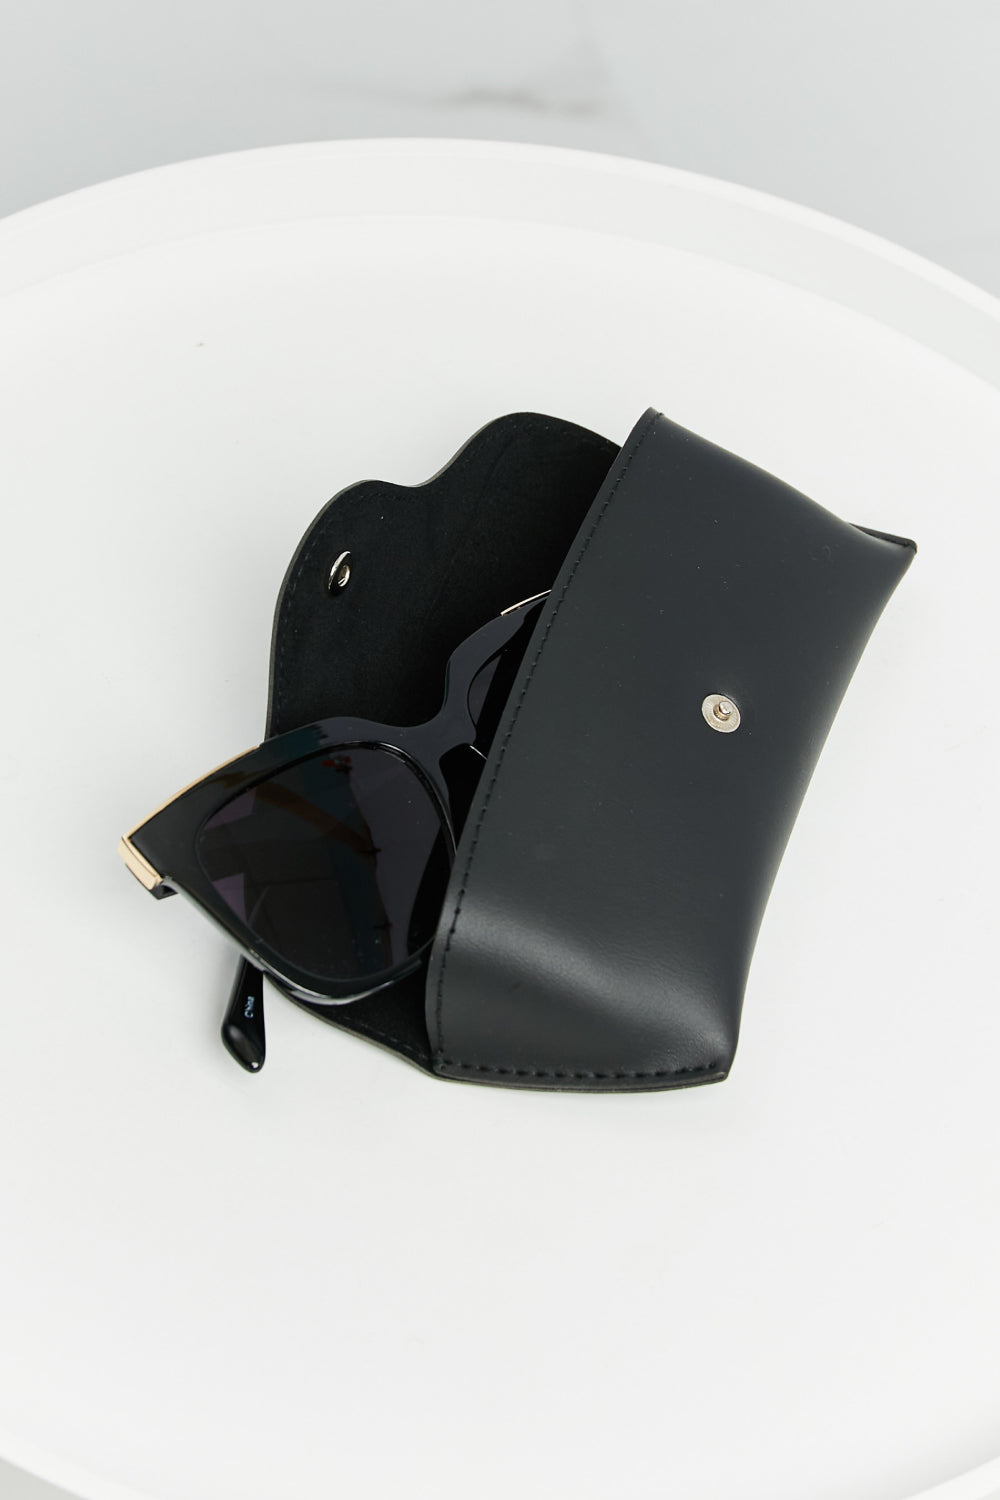 TAC Polarization Lens Aviator Sunglasses Print on any thing USA/STOD clothes